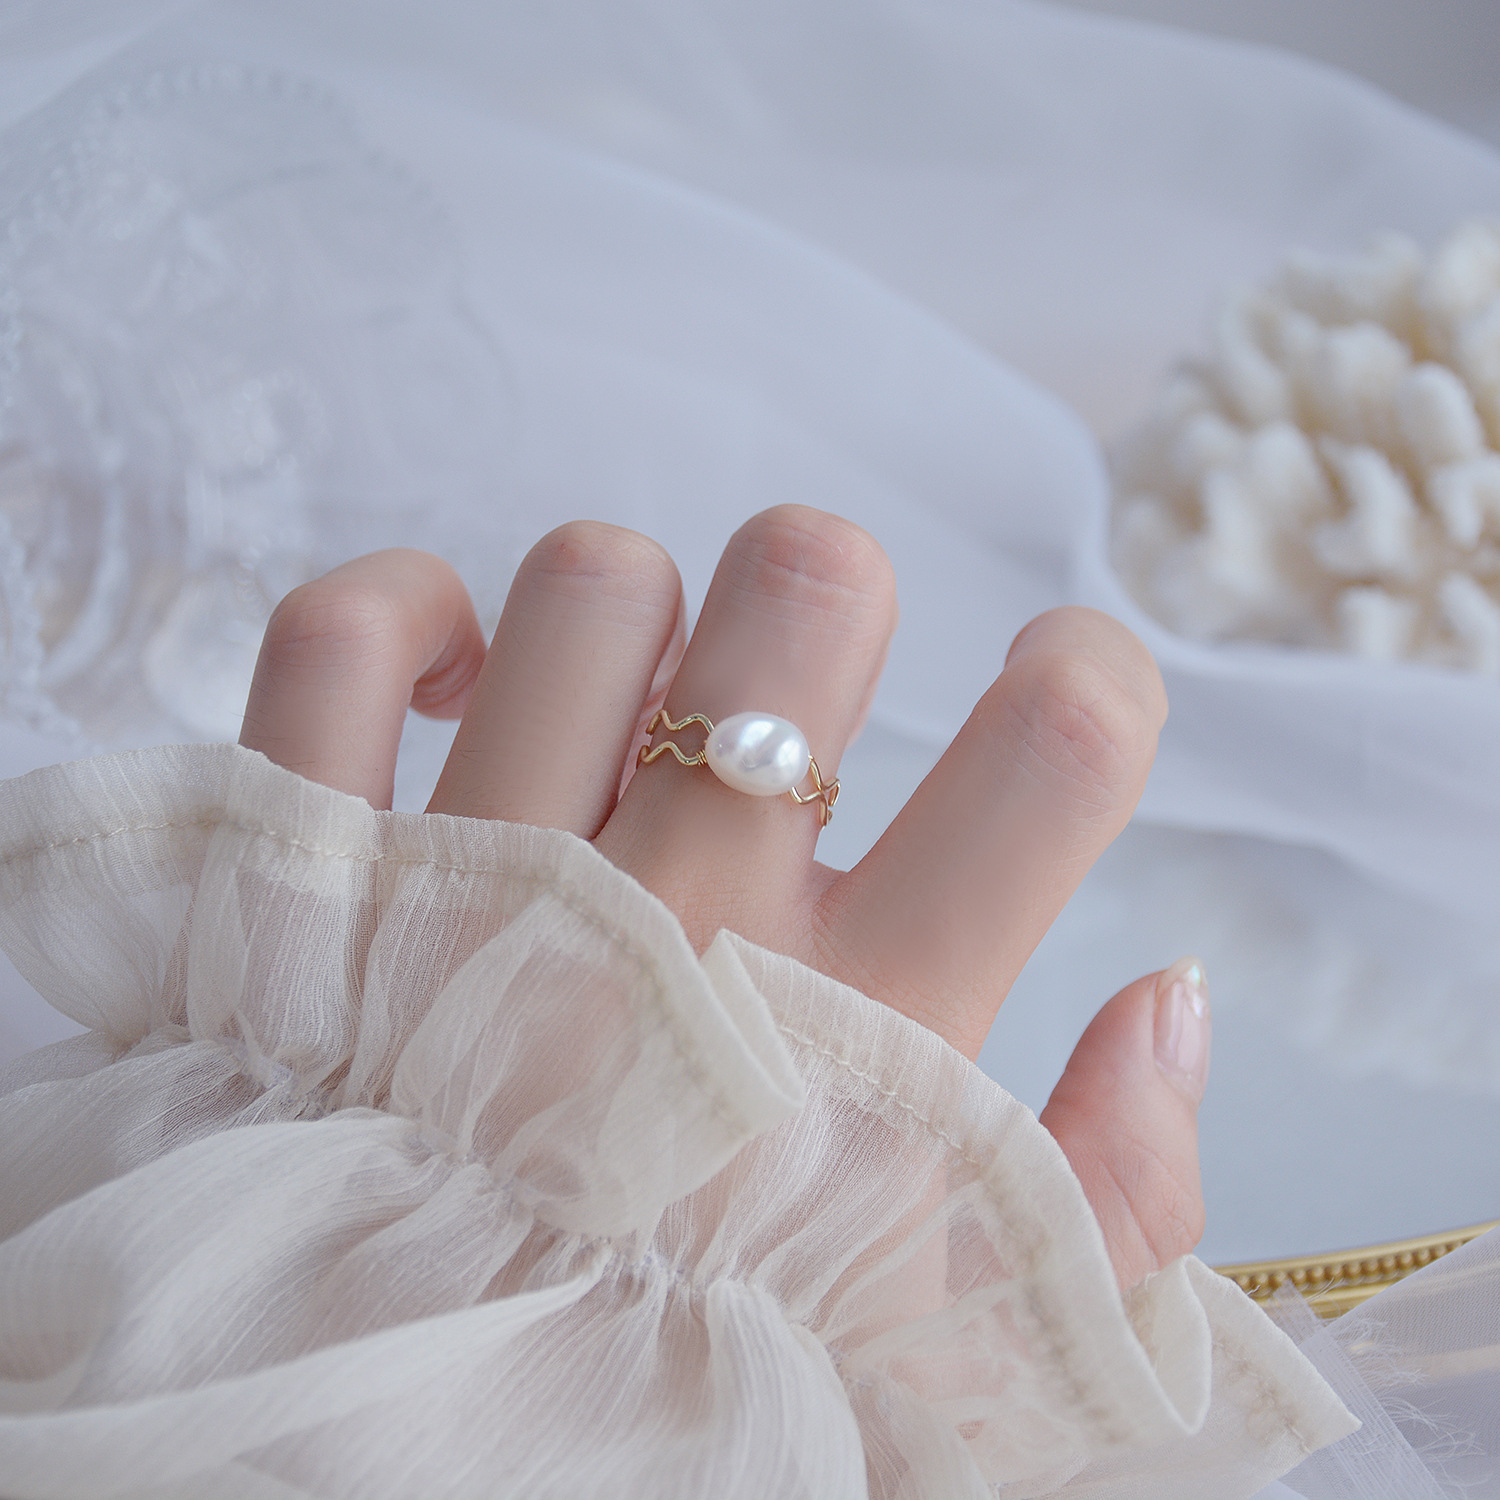 1:Simple pearl ring